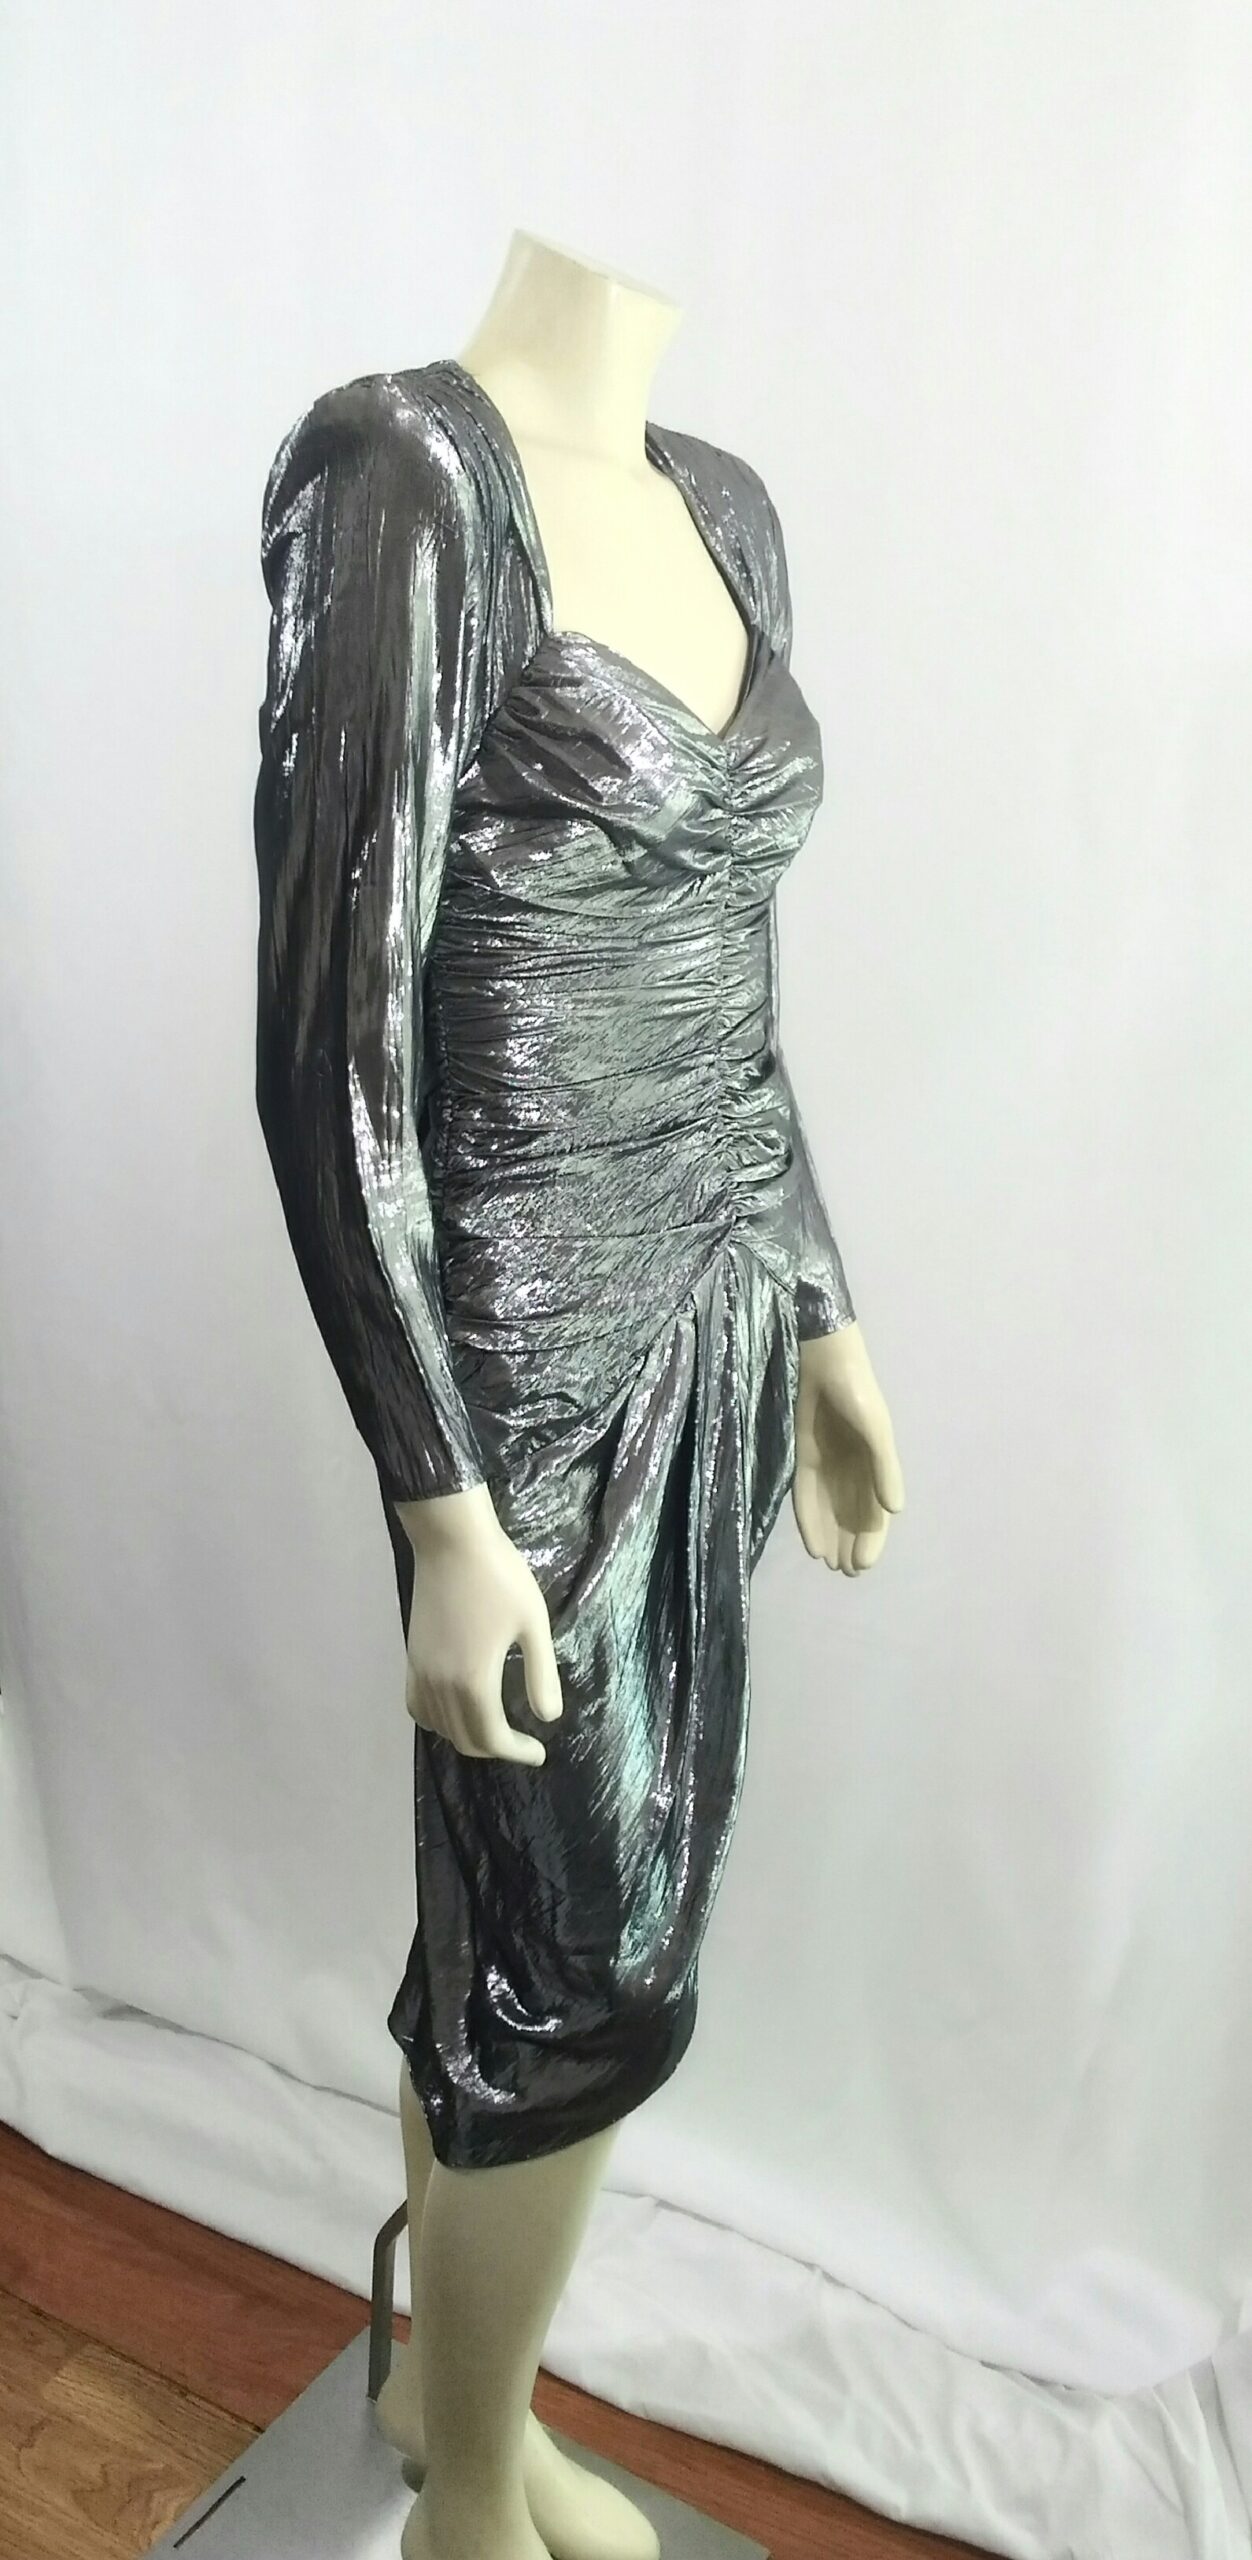 Vintage 1980's B.B. Collection Silver/Gun Metal Metallic Raunch Cocktail Dress with Sweetheart Neckline